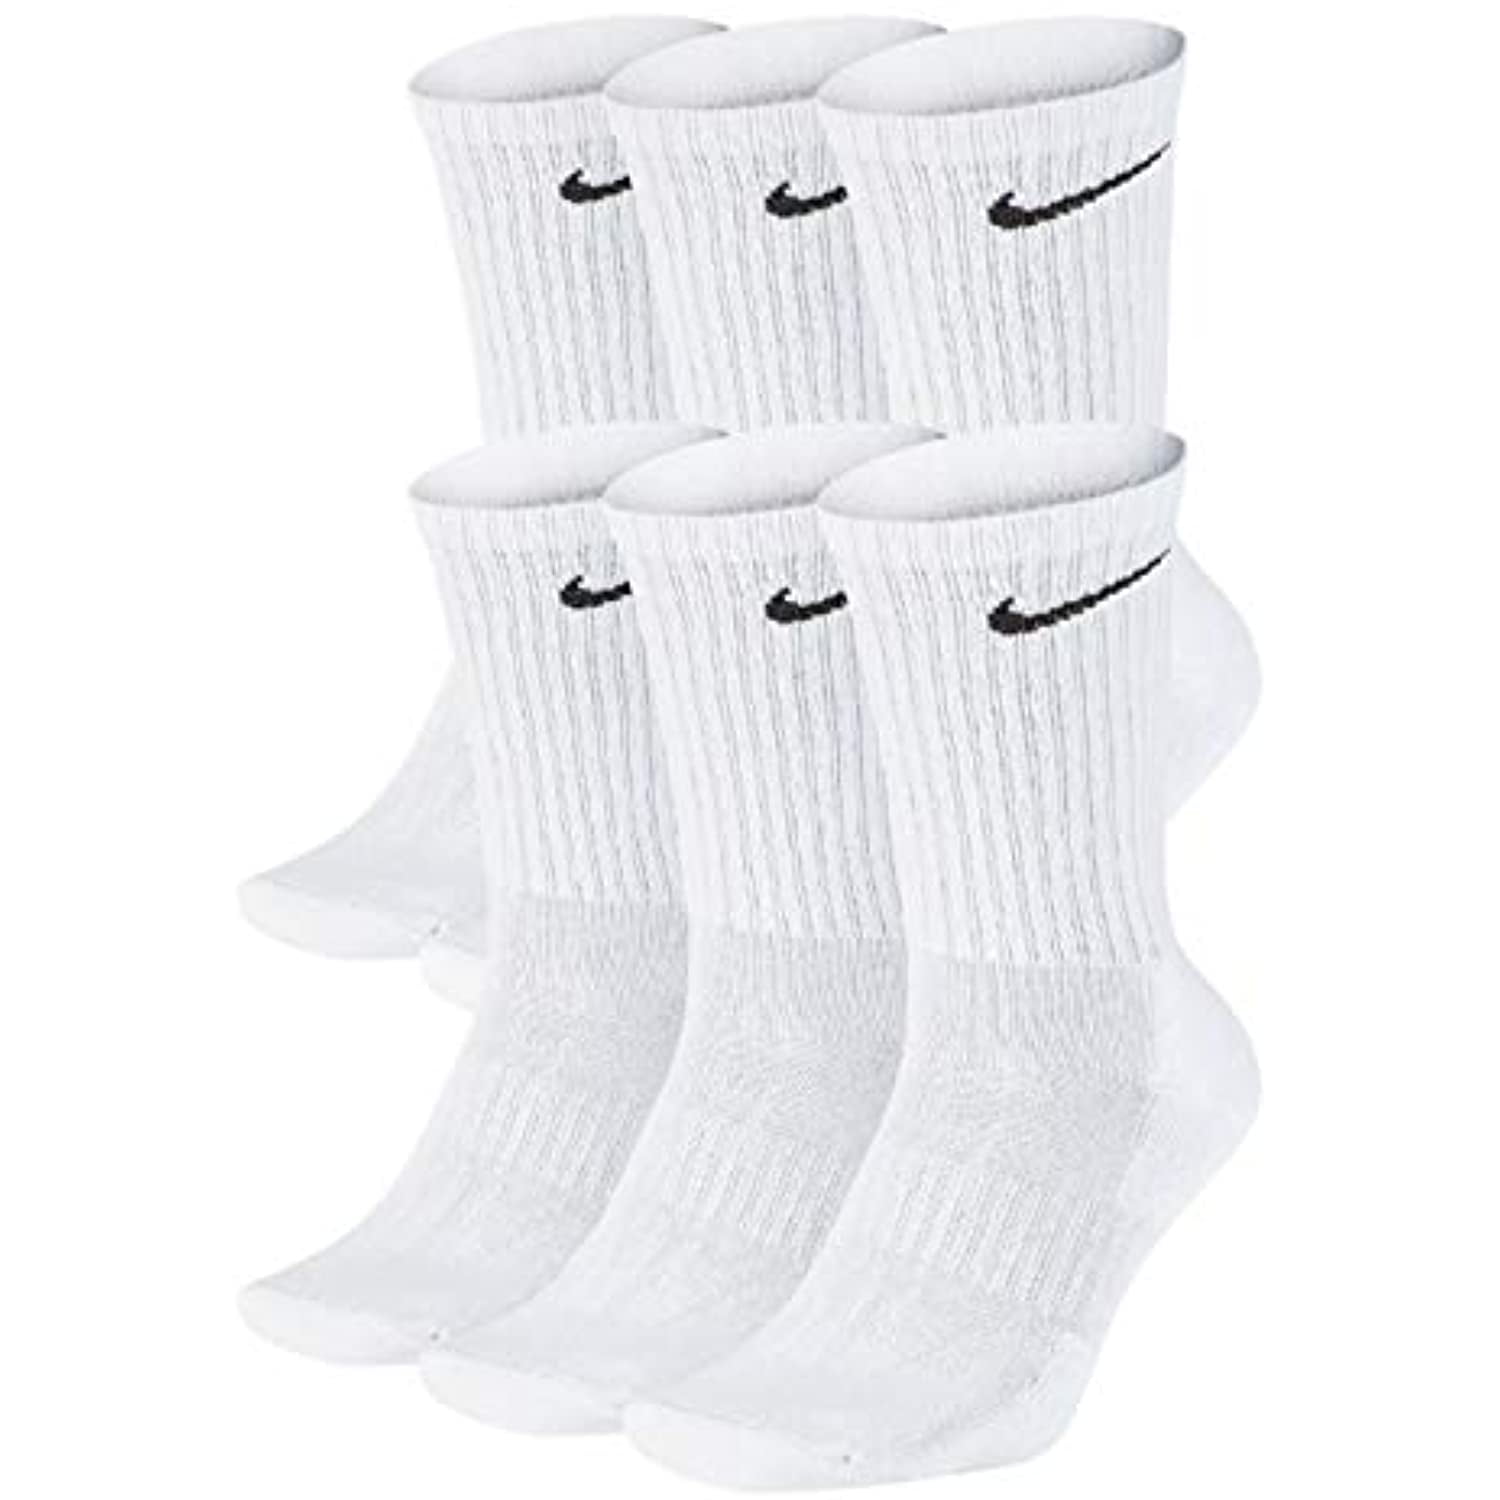 Raffinaderij geleidelijk Groot universum NIKE Everyday Performance Training Socks (6-Pair) (M (Men's 6-8 / Women's  6-10), Crew White) - Walmart.com